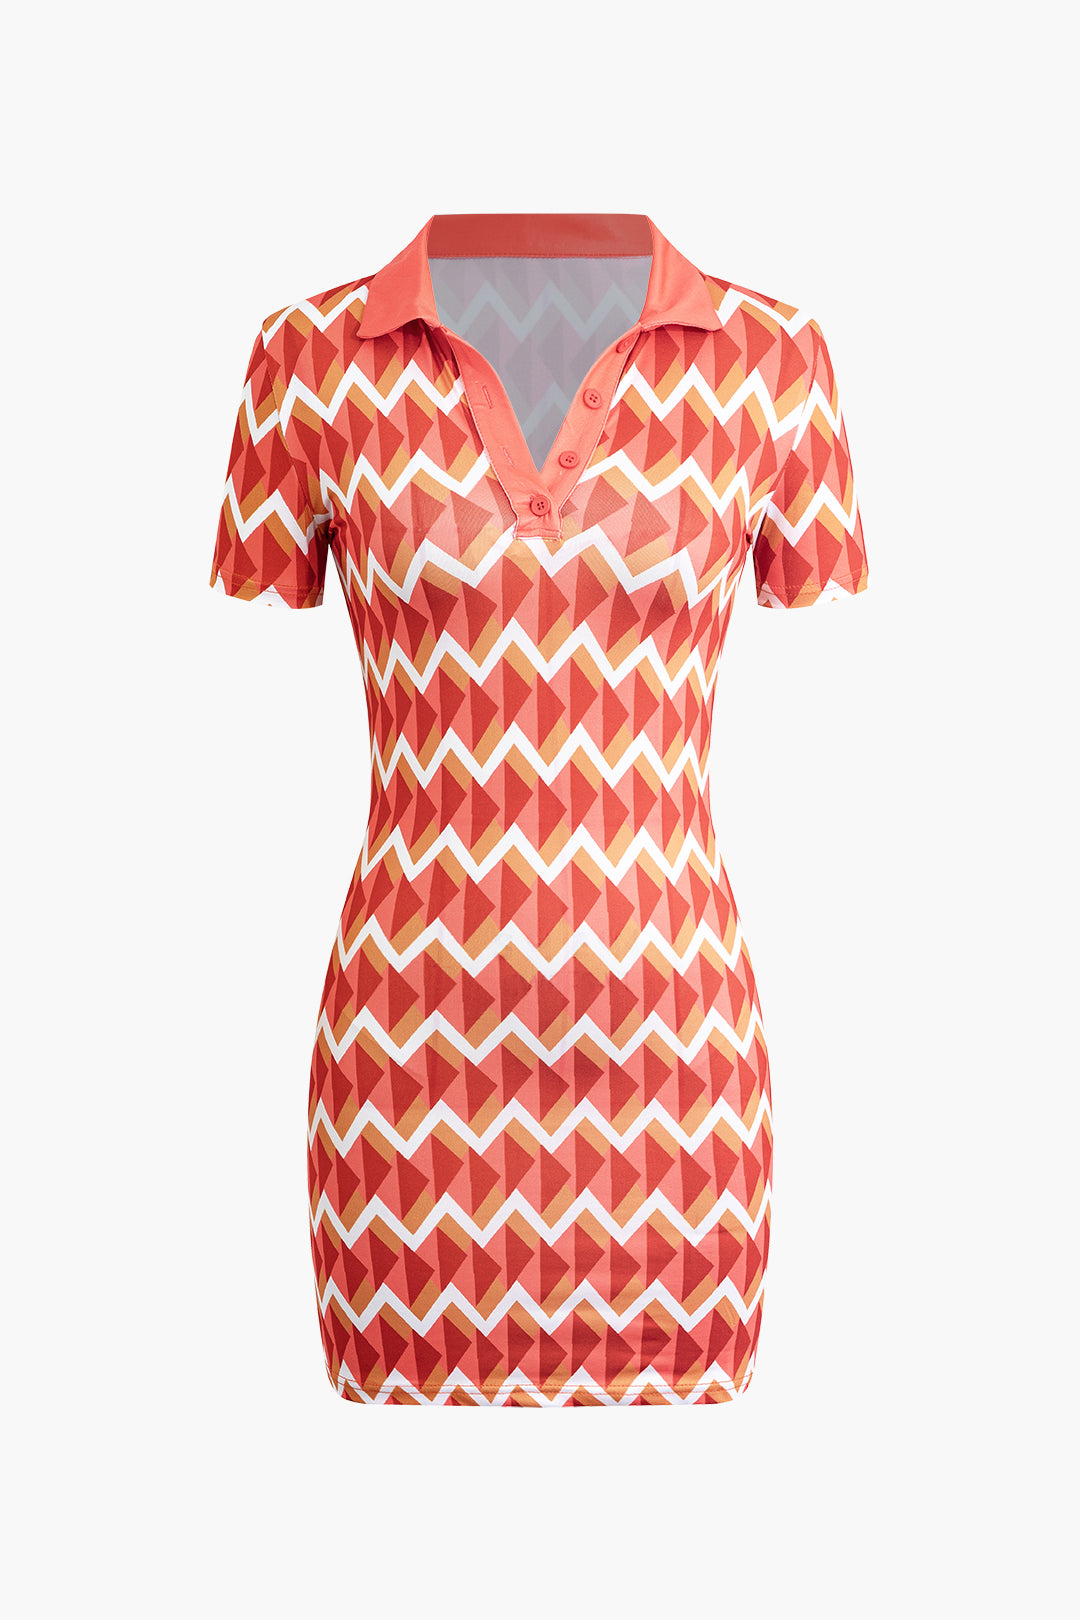 Sharp Wave Patterned Polo Mini Dress